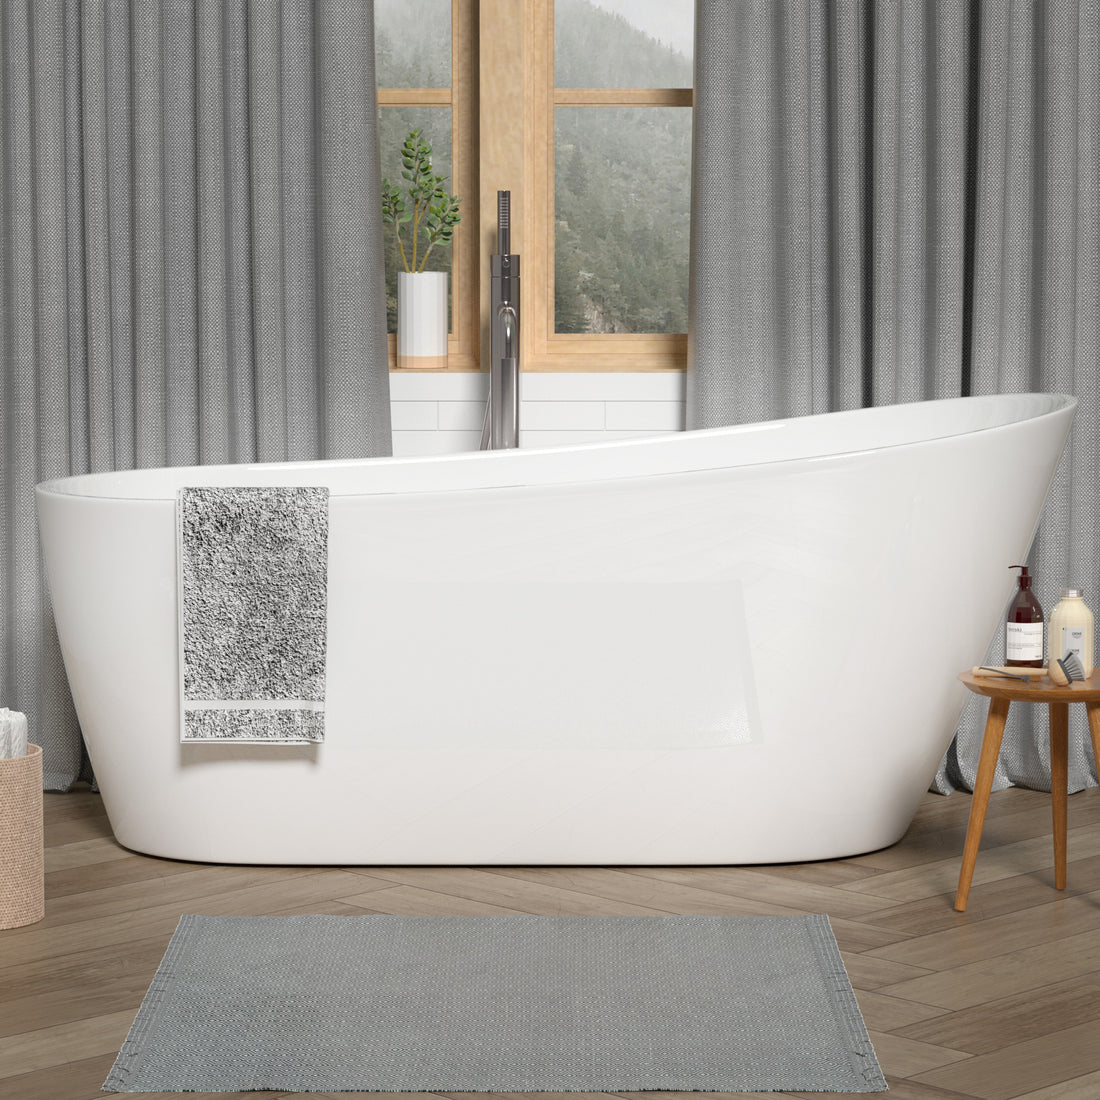 Acrylic Freestanding Soaking Bathtub 55 white white-acrylic